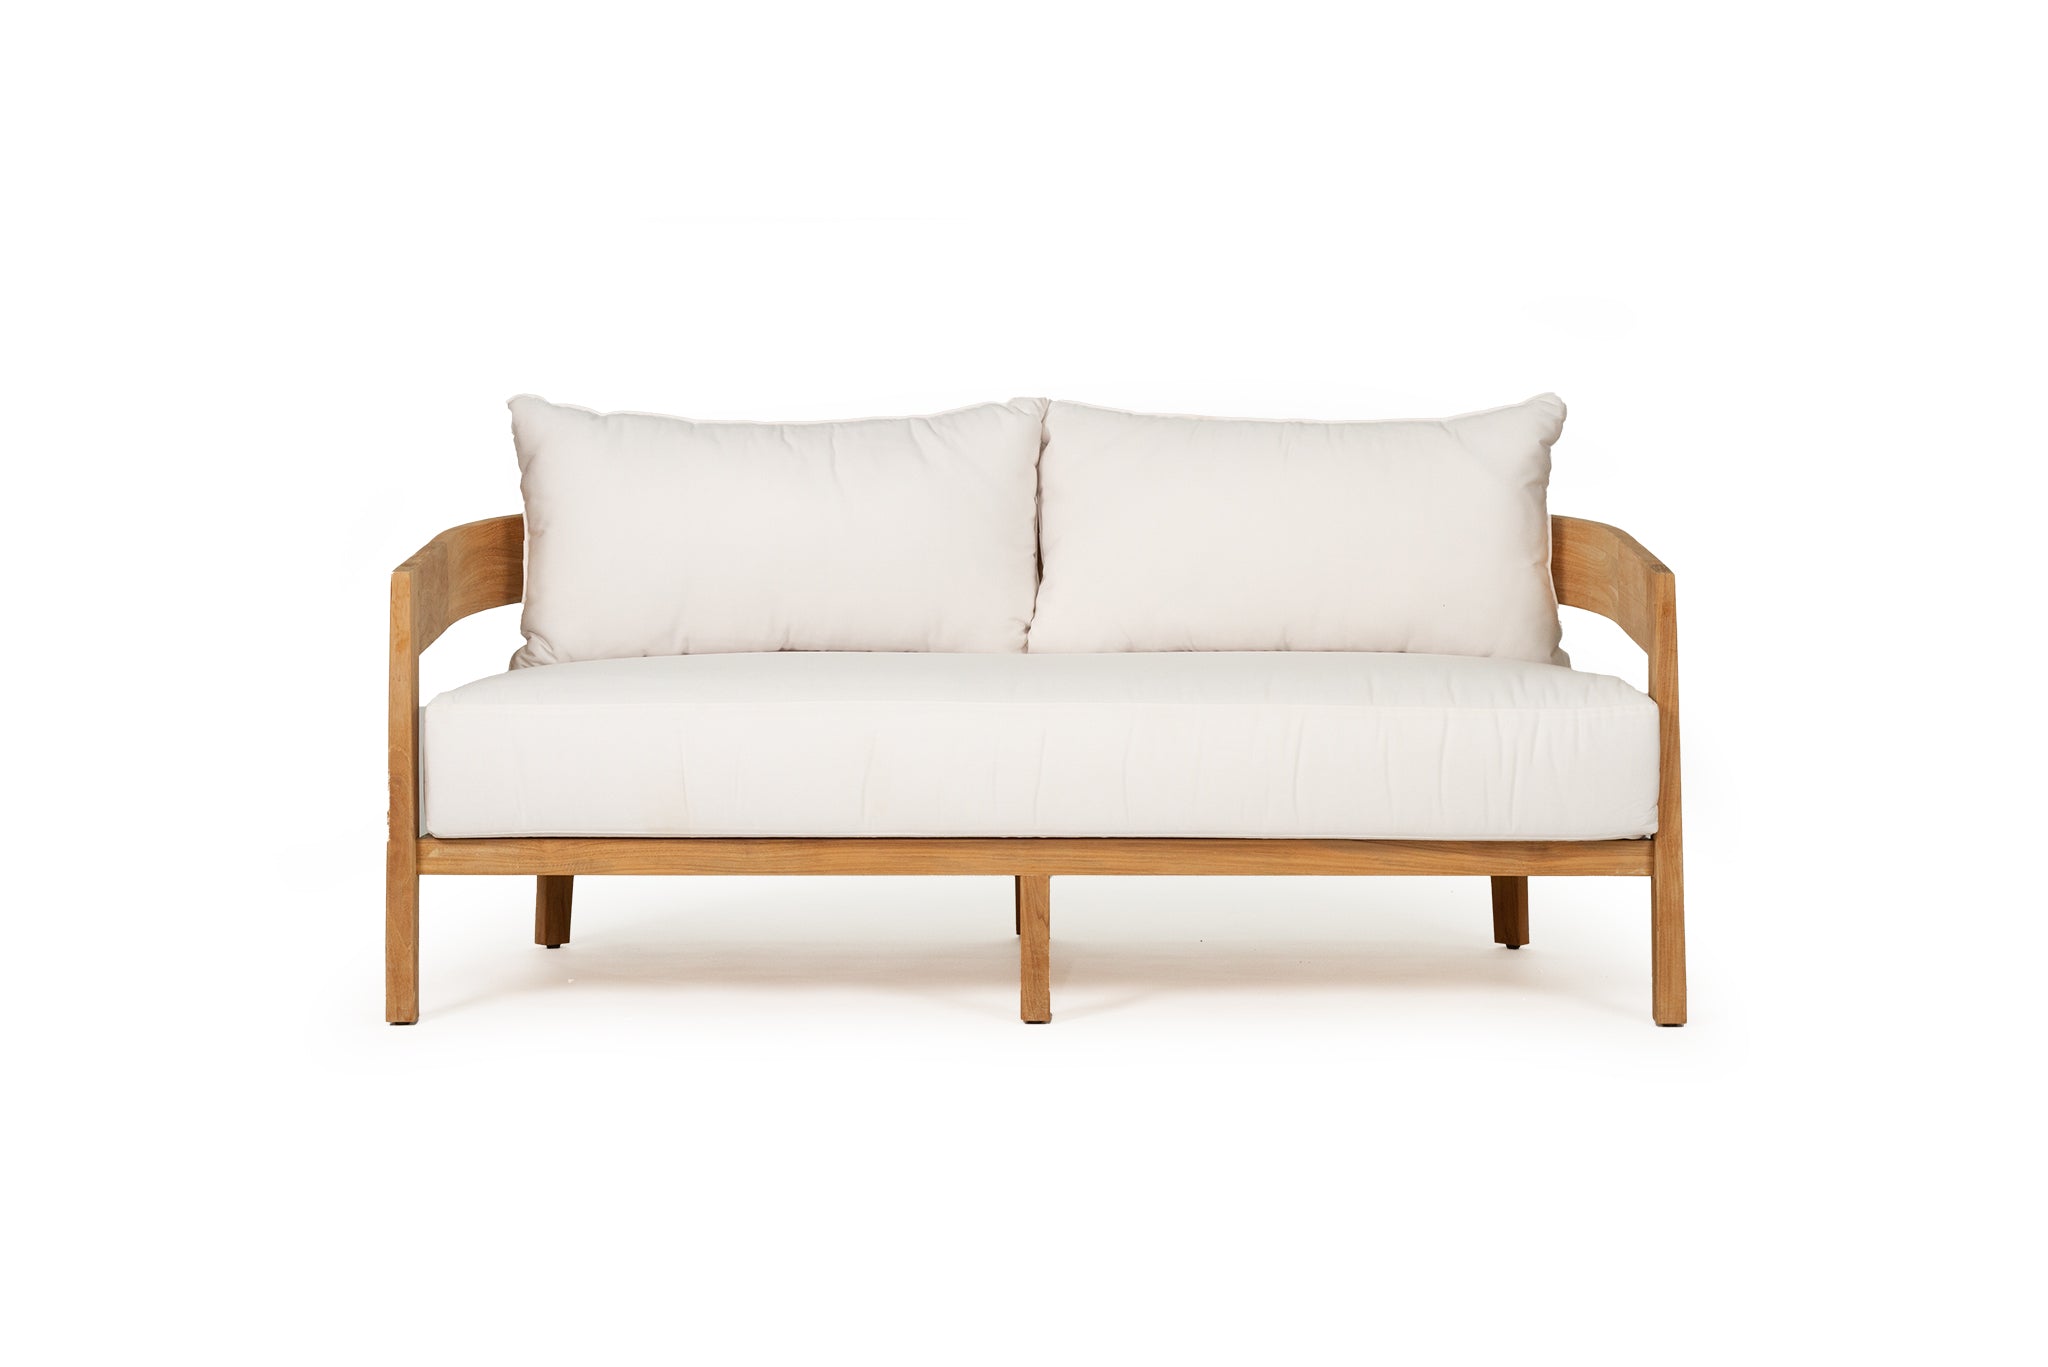 Queenscliff Teak Outdoor Sofa – 2 Seater – White